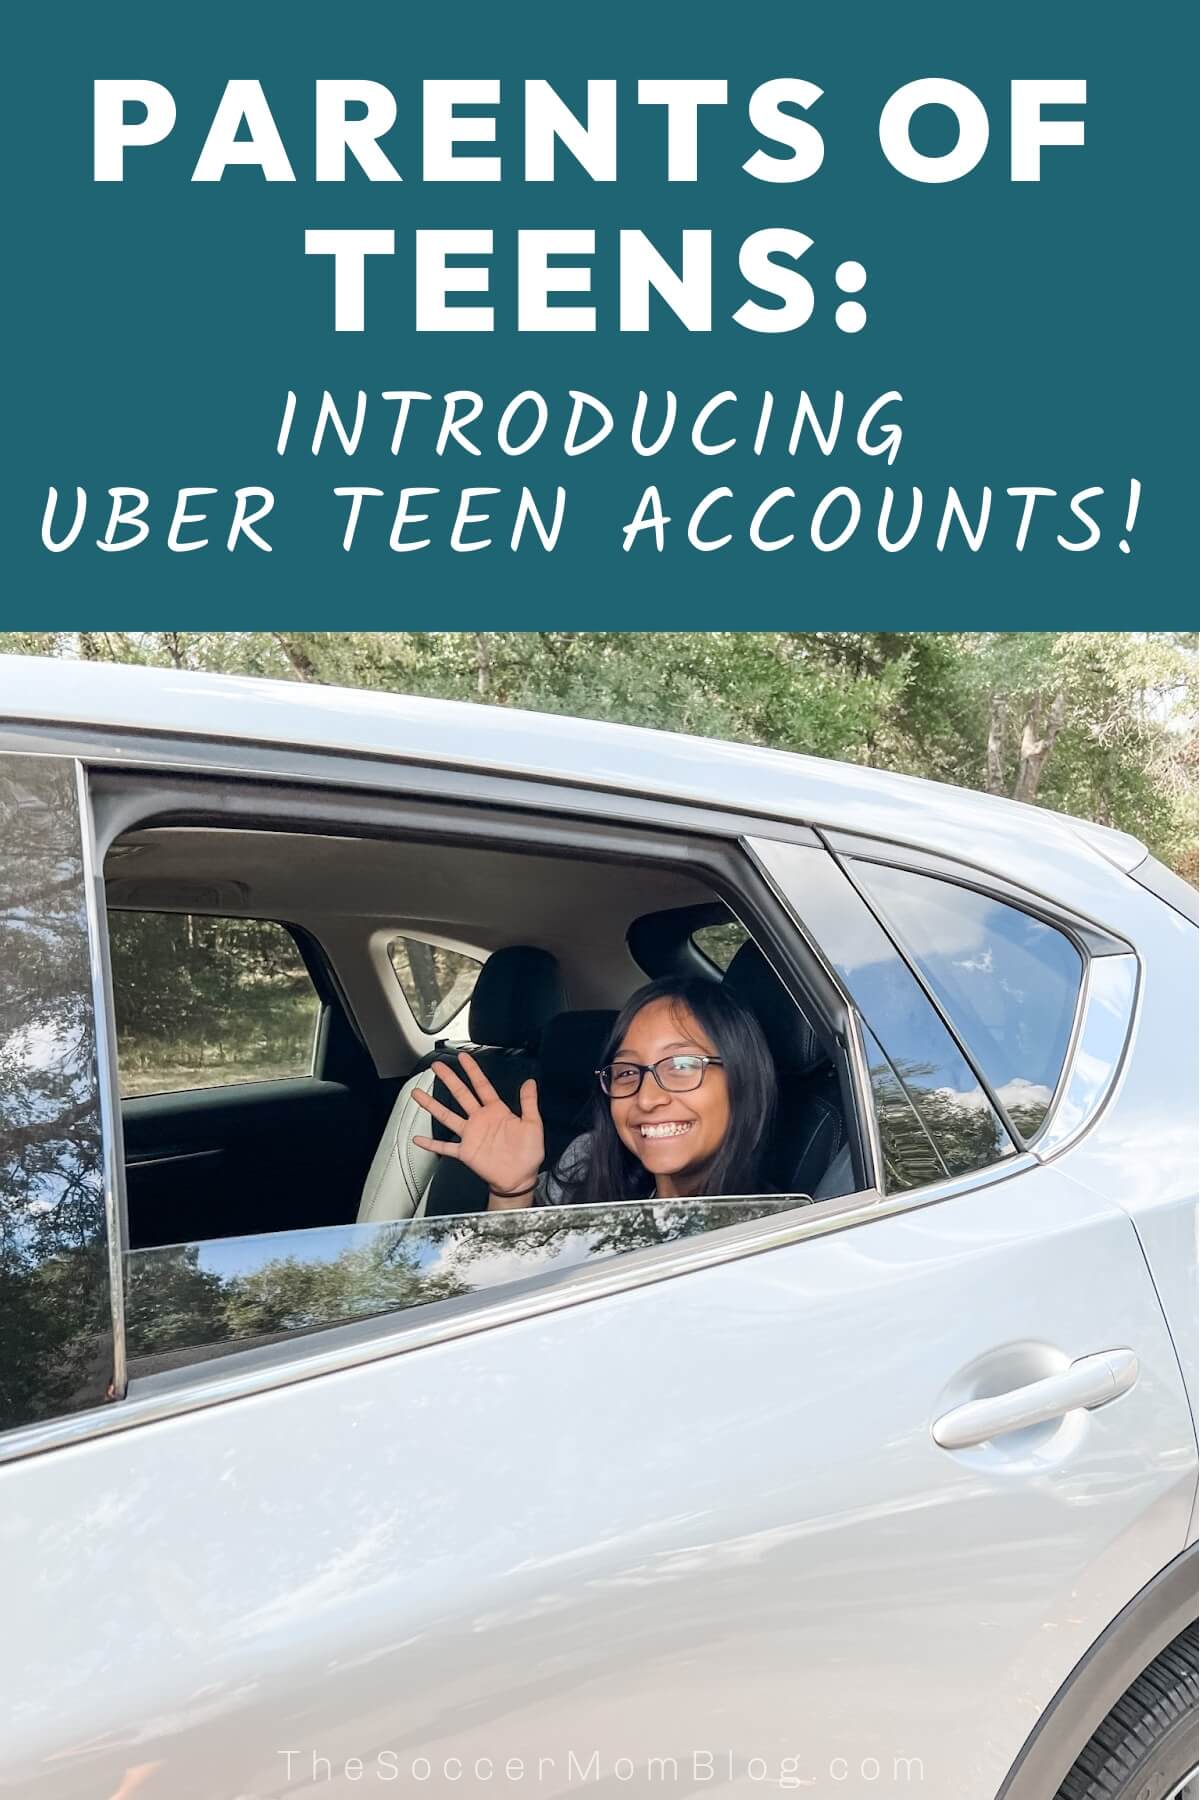 teen girl waving from backseat of car; text overlay "Parents of Teens: Introducing Uber teen accounts".